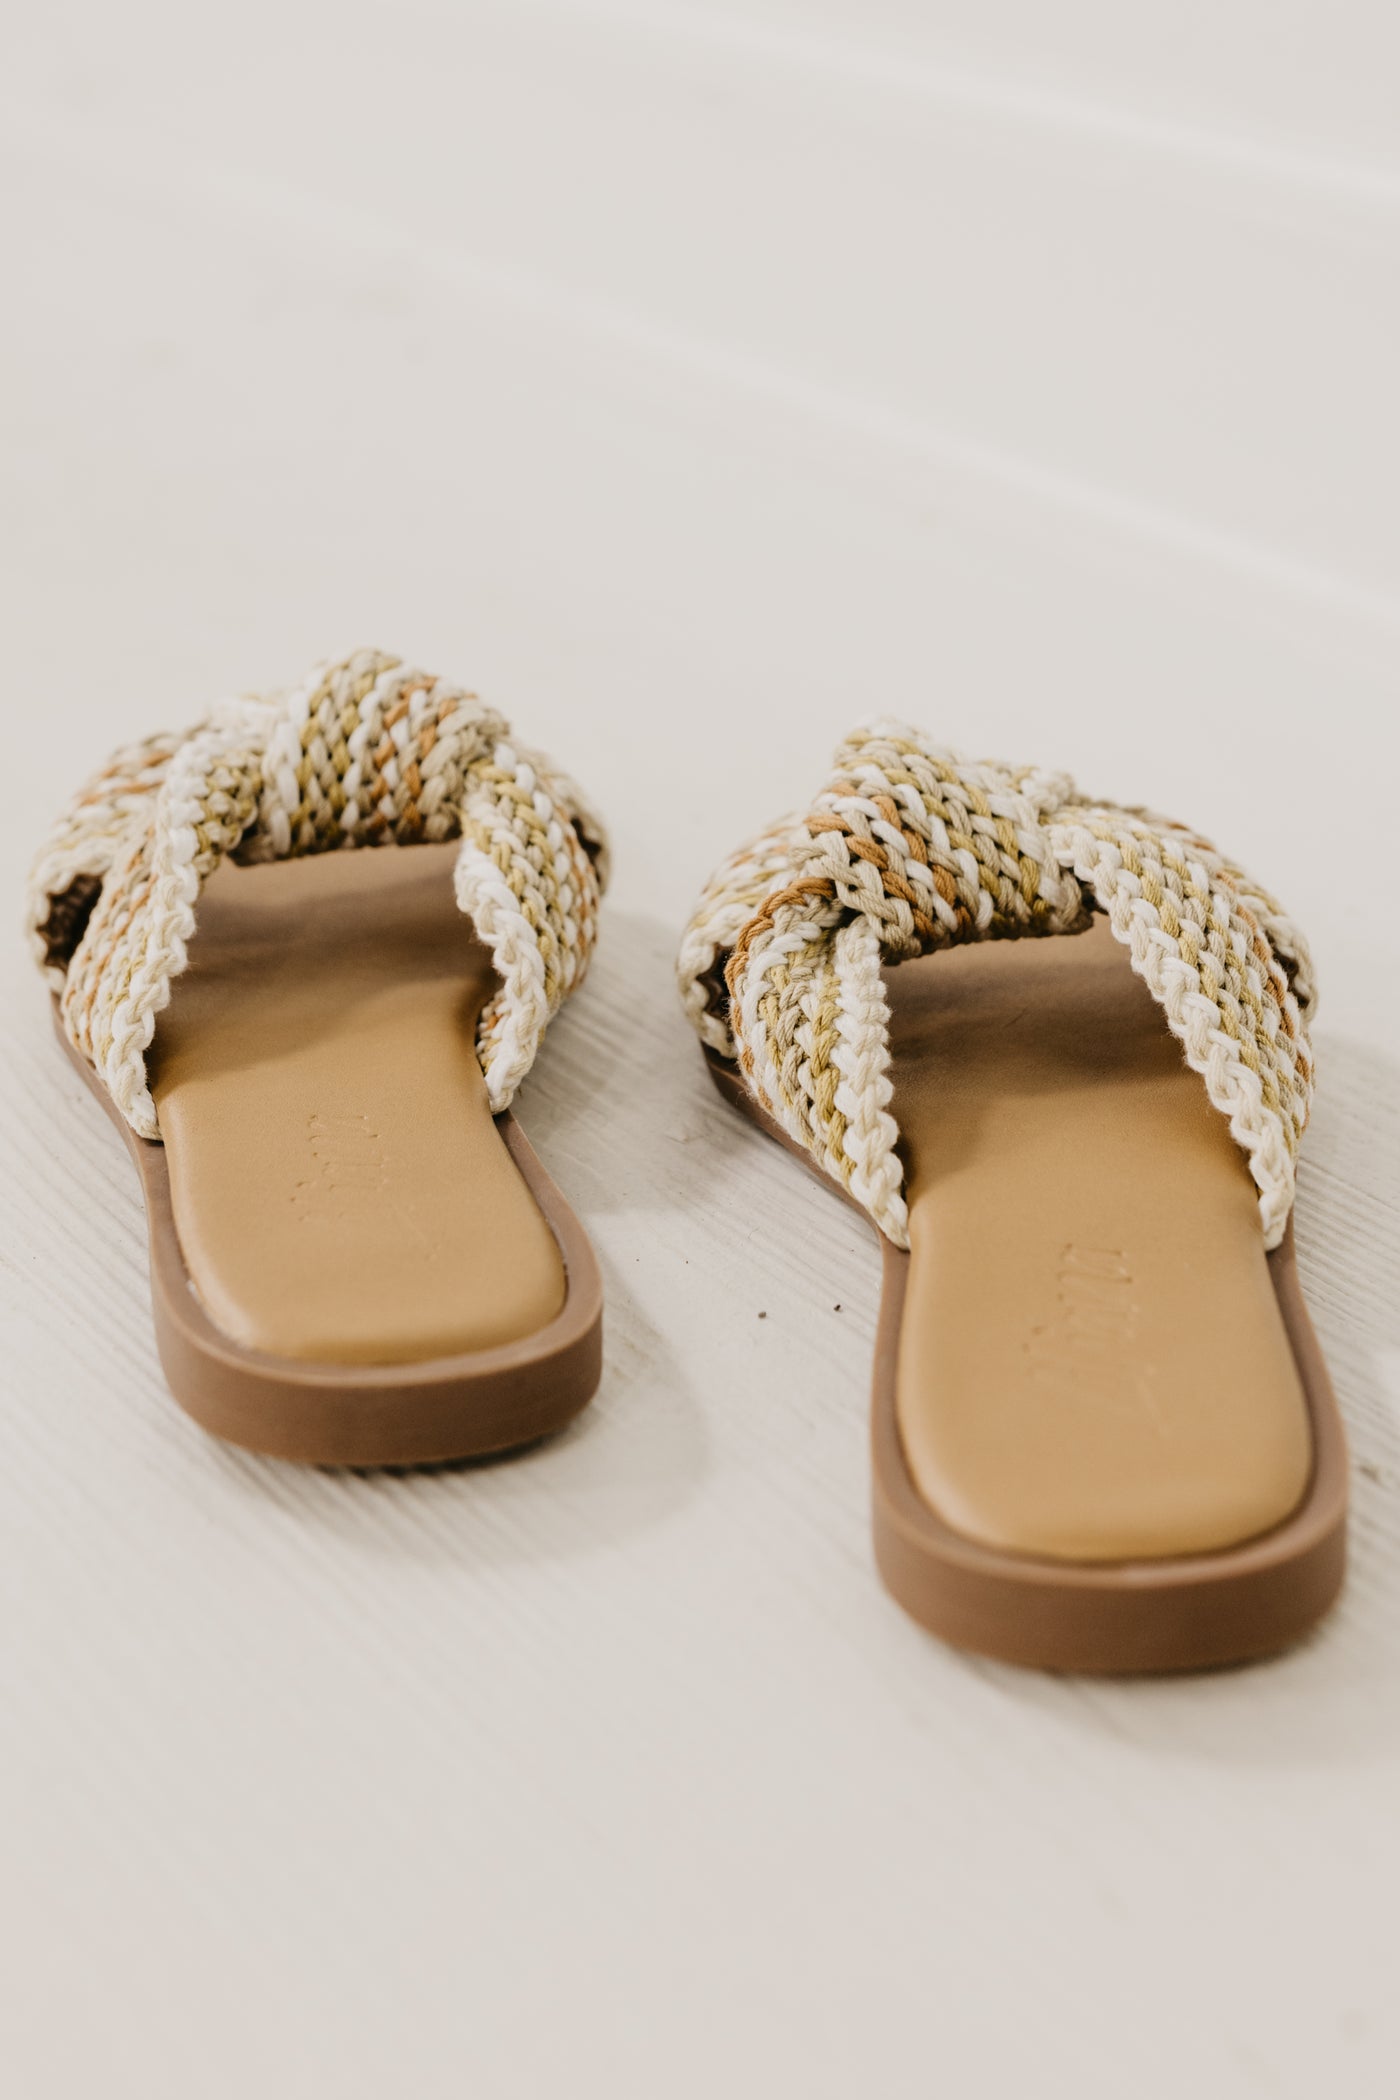 The Hailie Knit Knot Slide Sandal